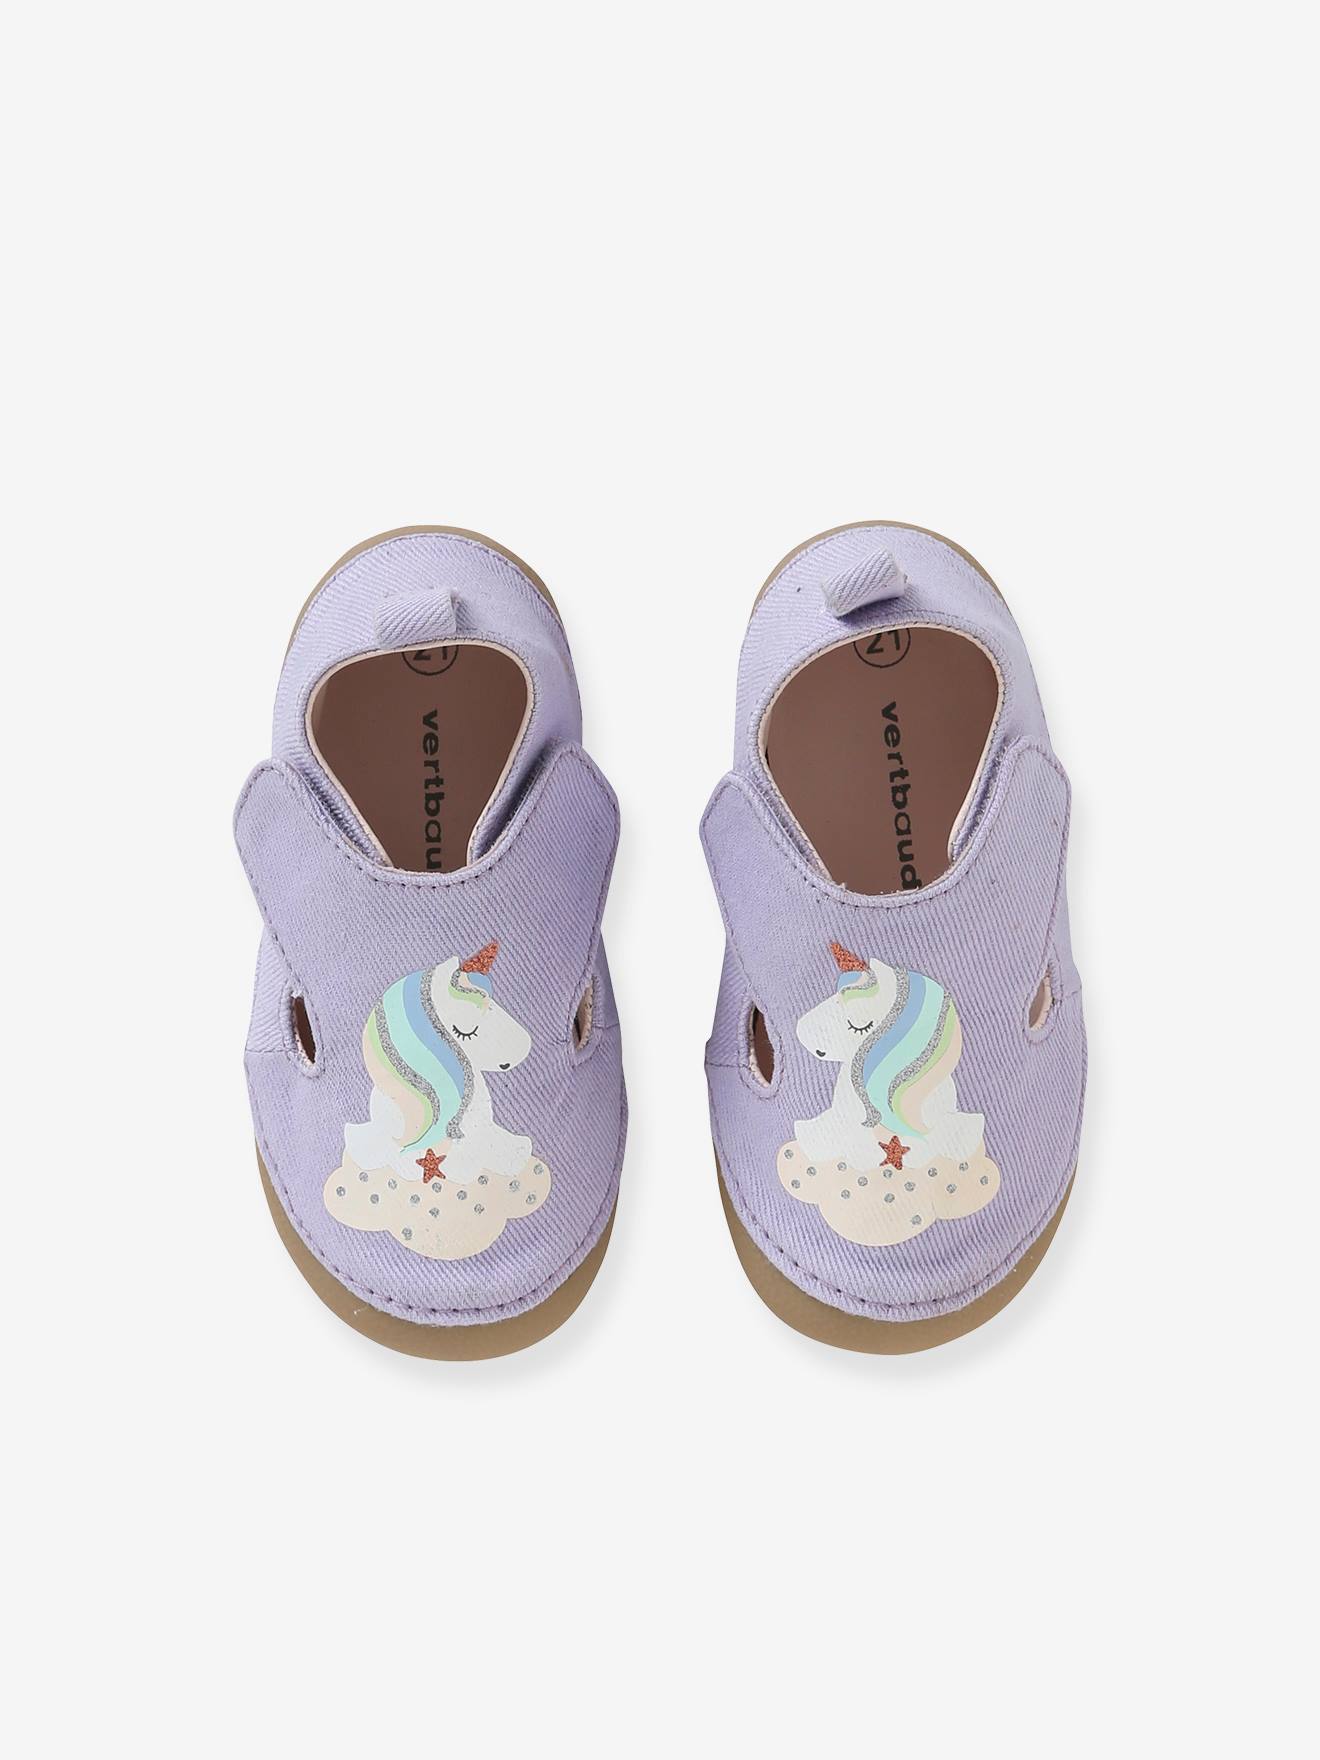 Tratamiento Preferencial Falsificación Asesinar Zapatillas de casa de tela con unicornio, para bebé niña violeta claro liso  - Vertbaudet